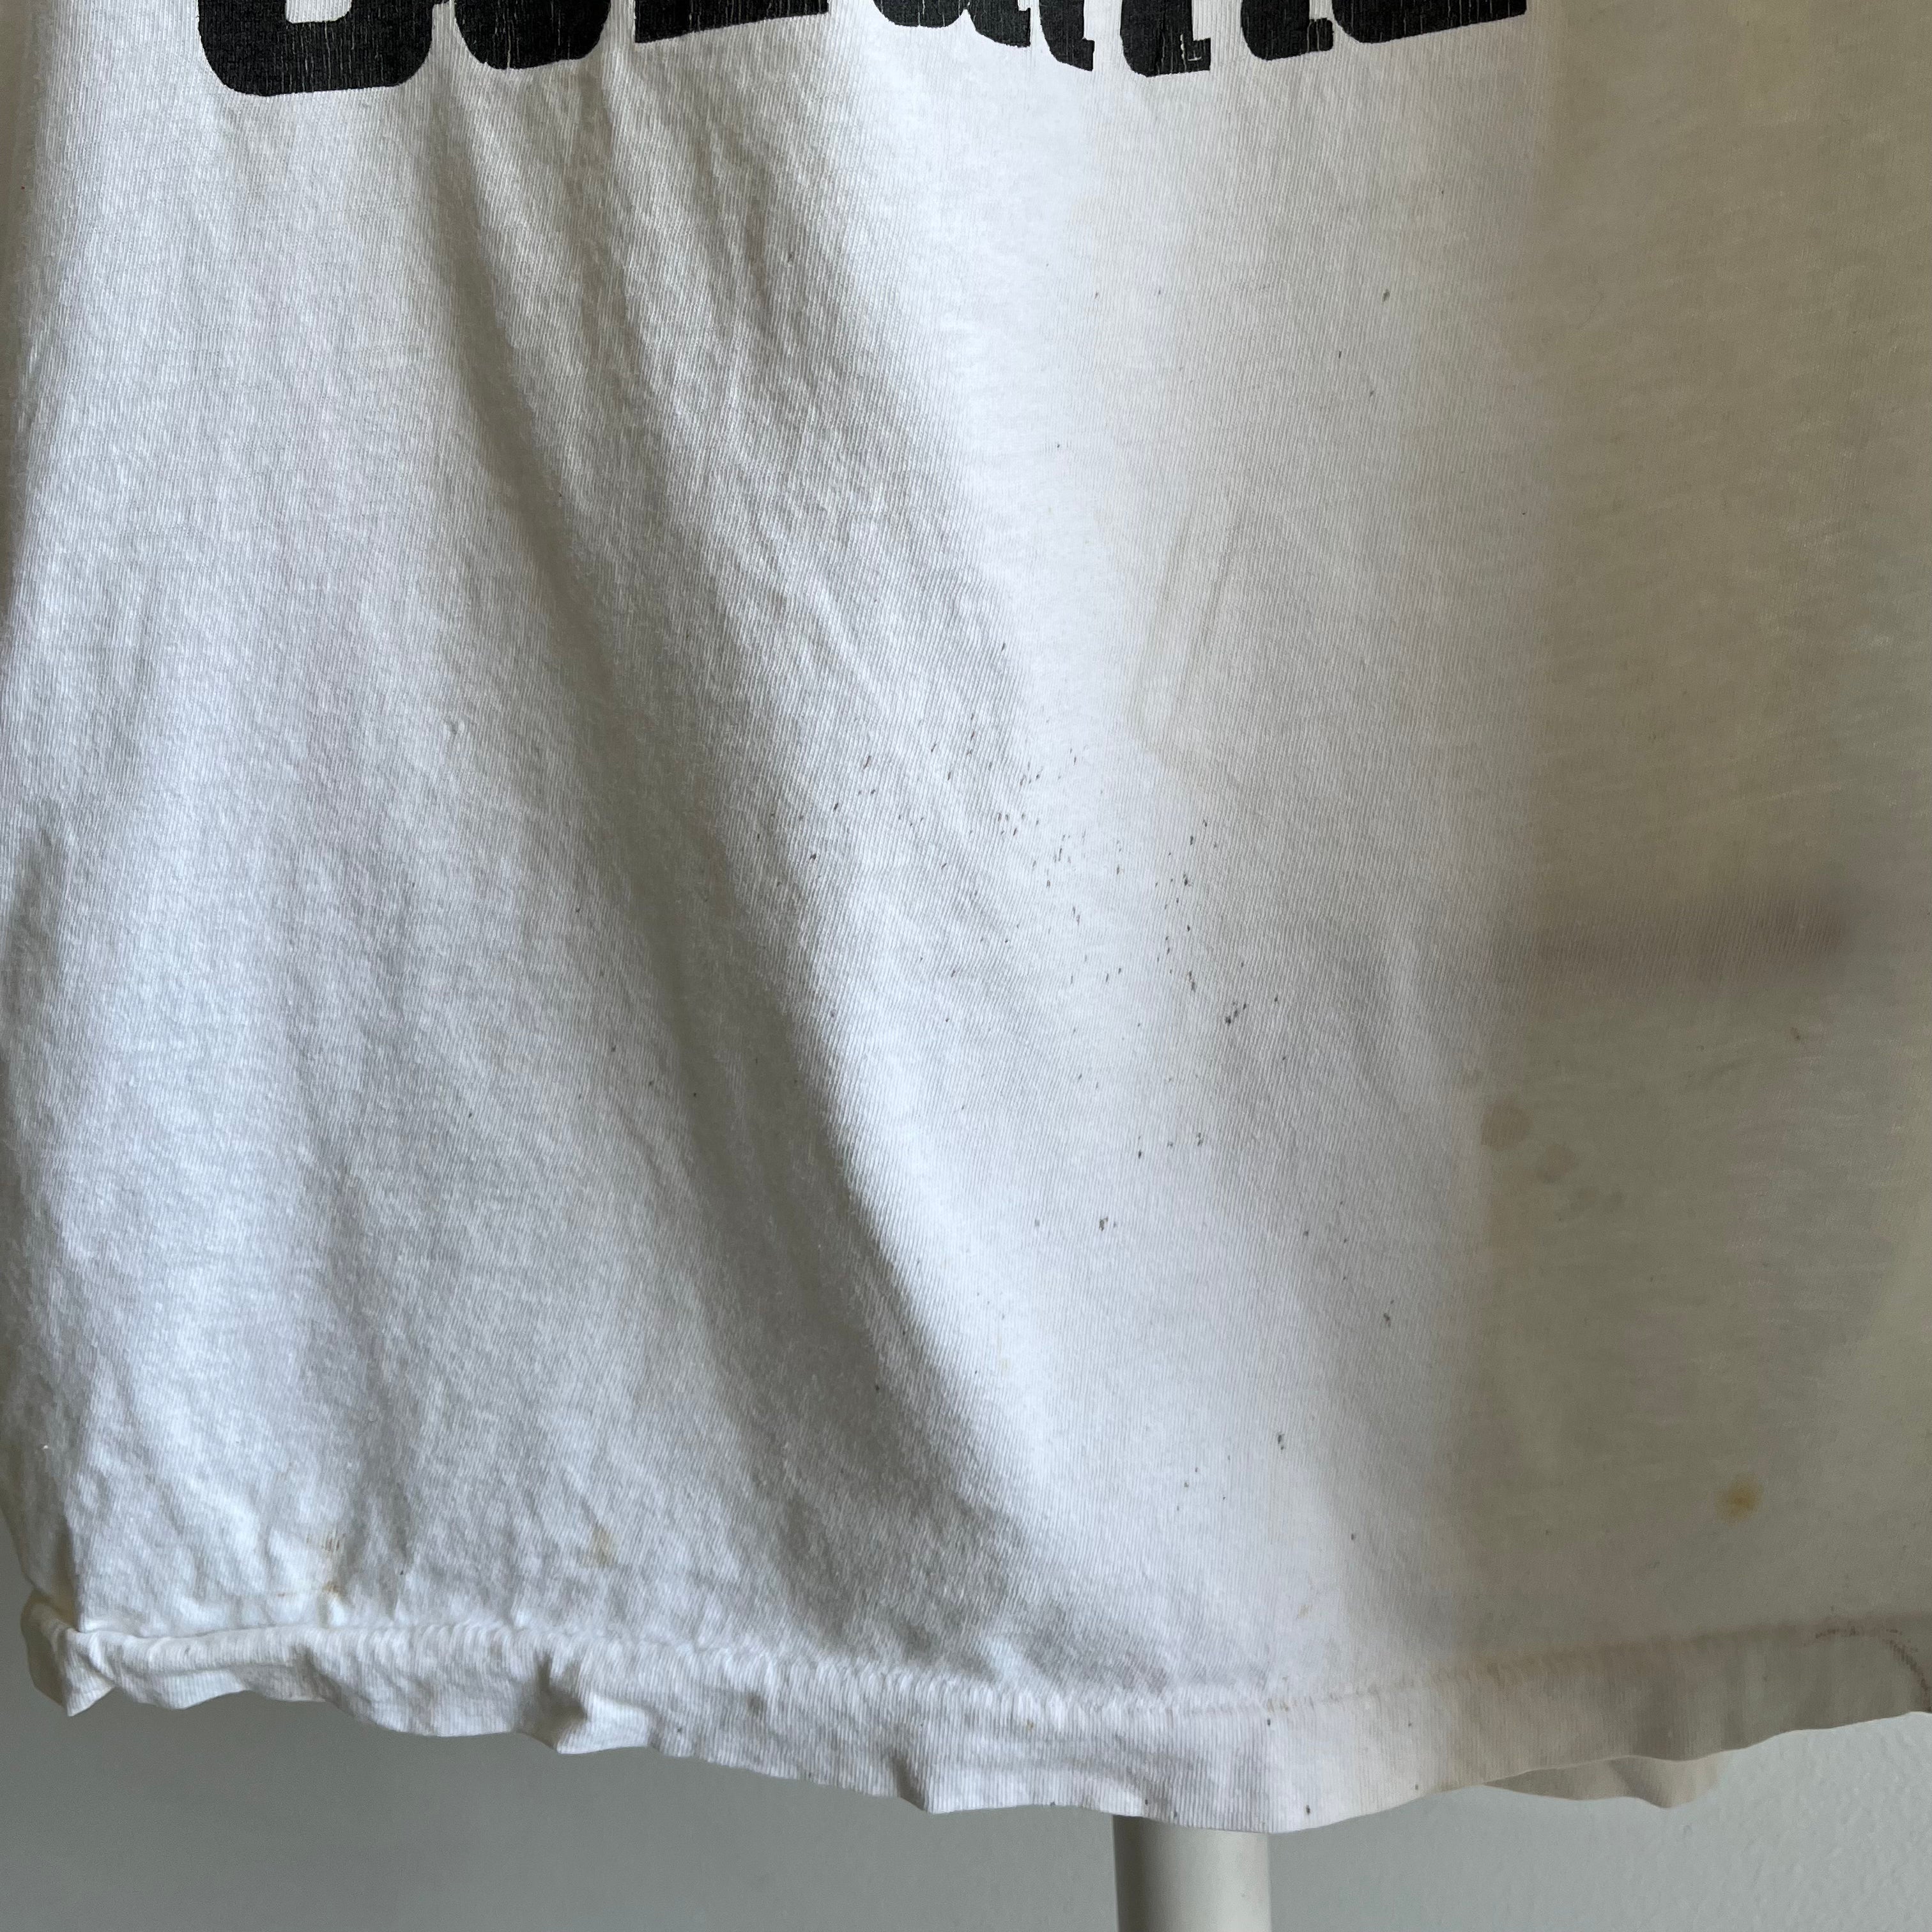 1990/2000s Cozumel Tourist T-Shirt